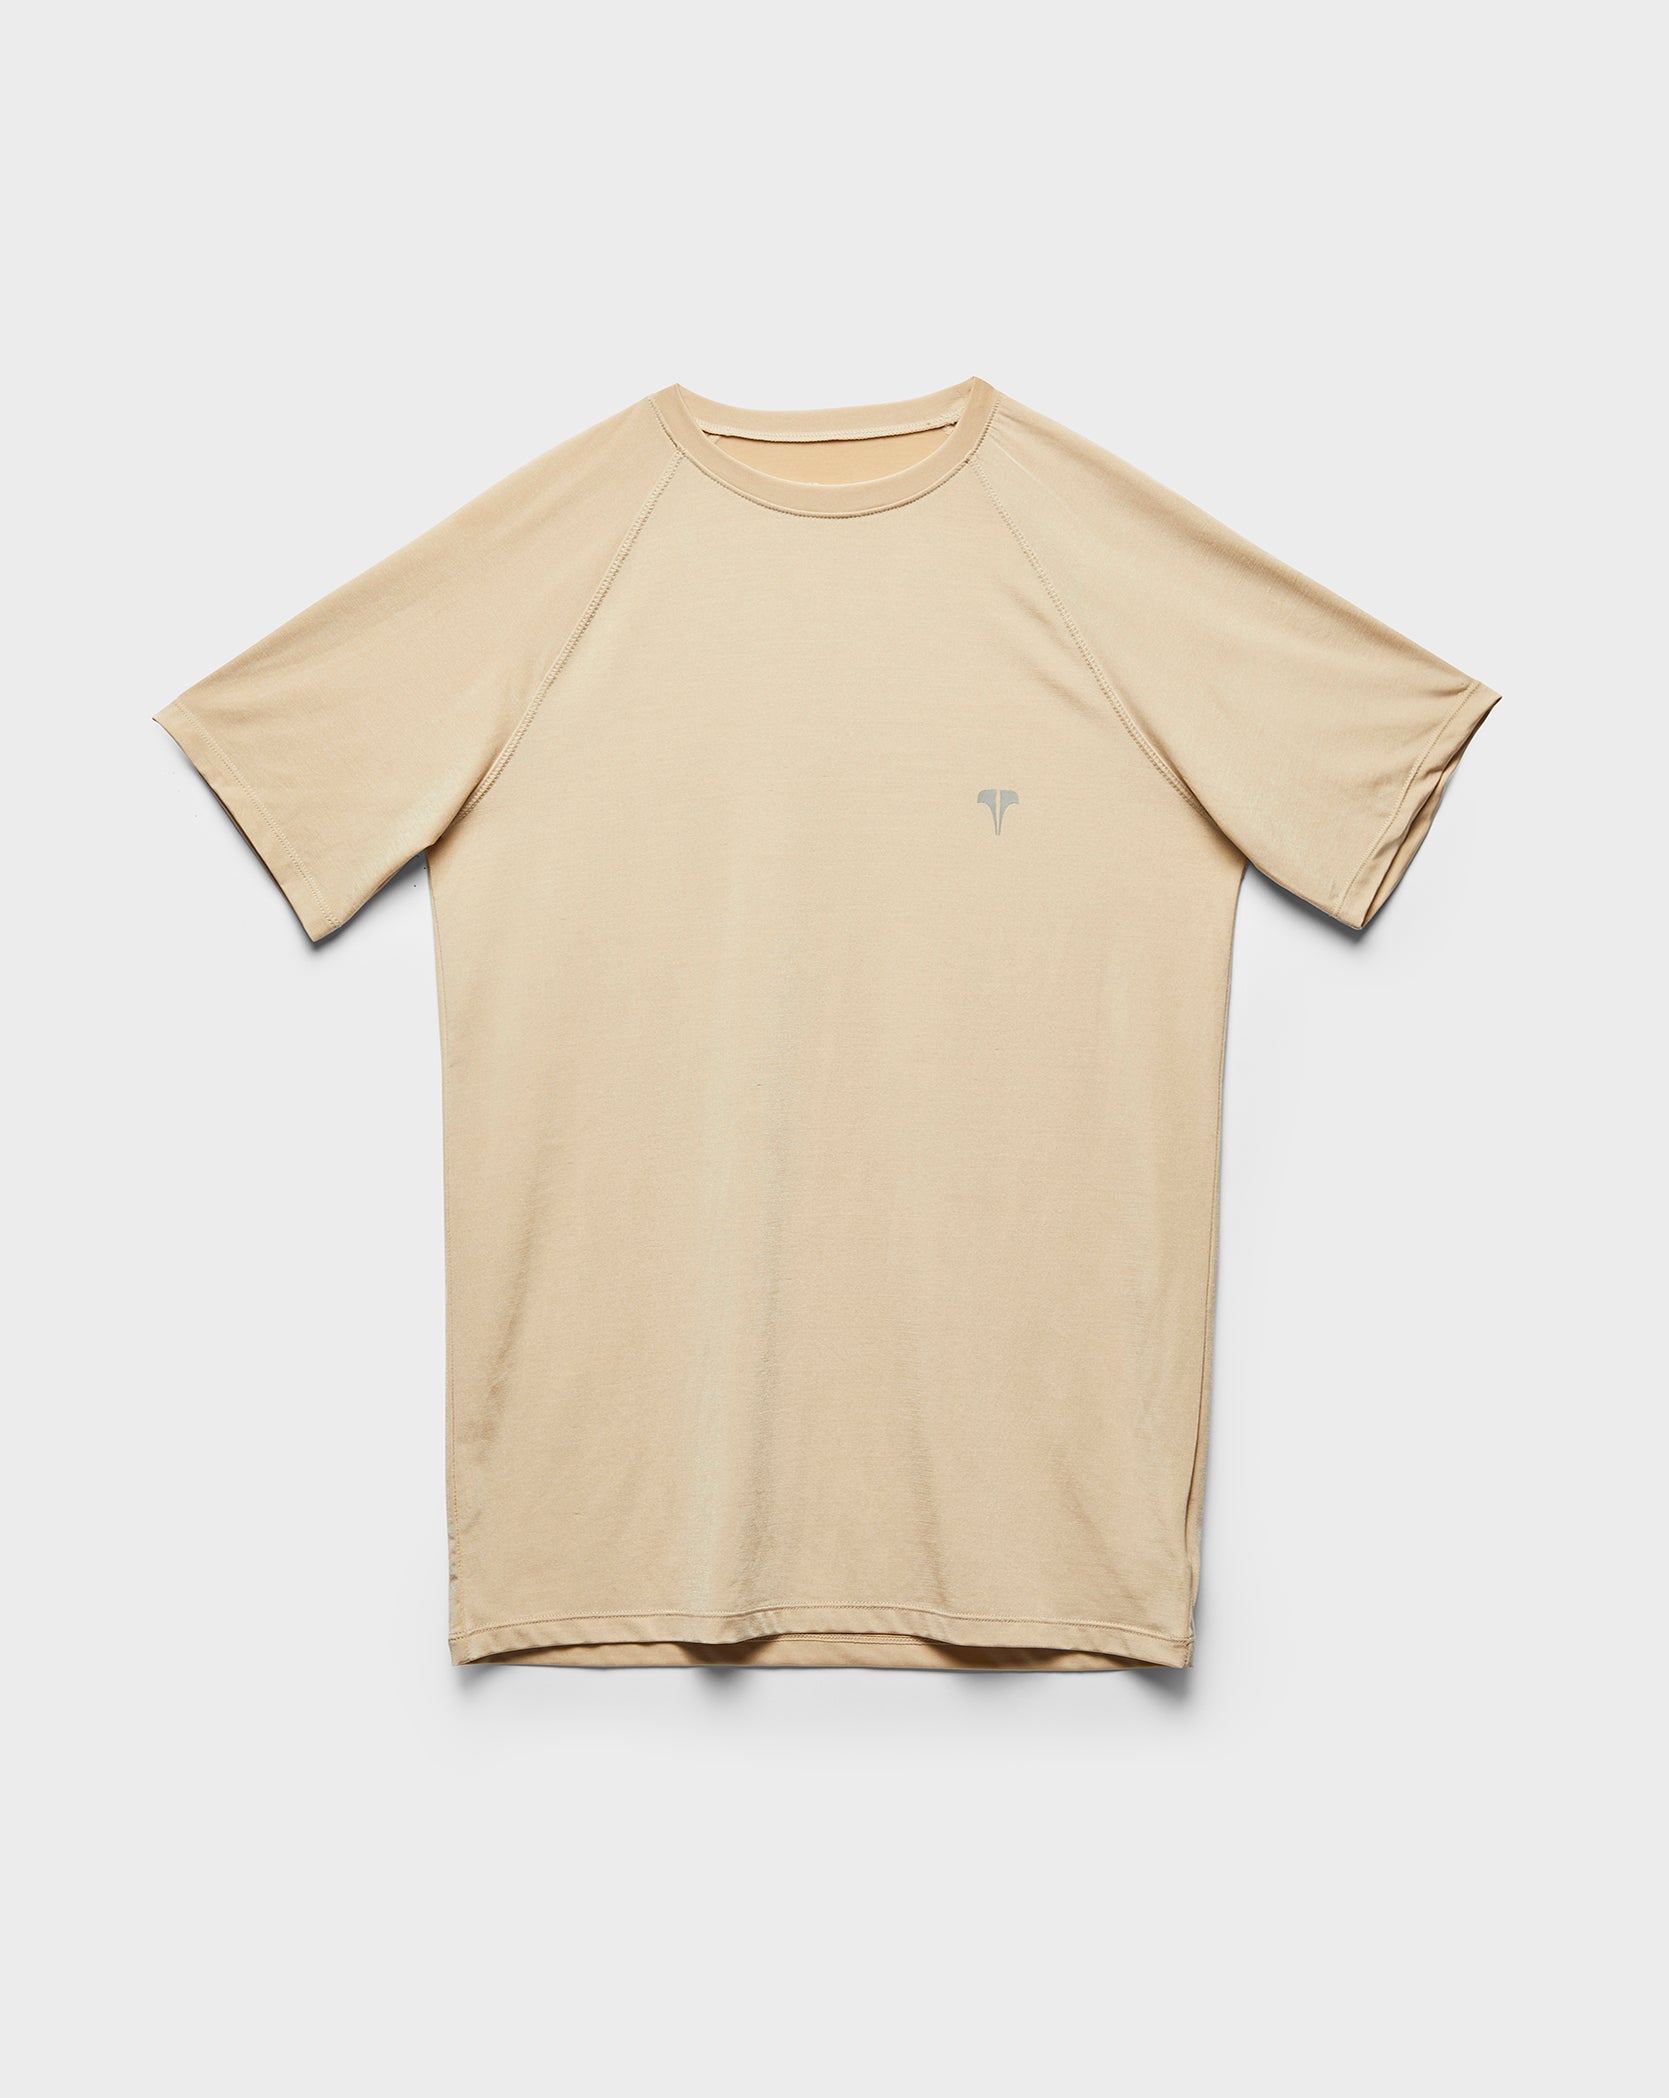 Twinzz active beige t-shirt front